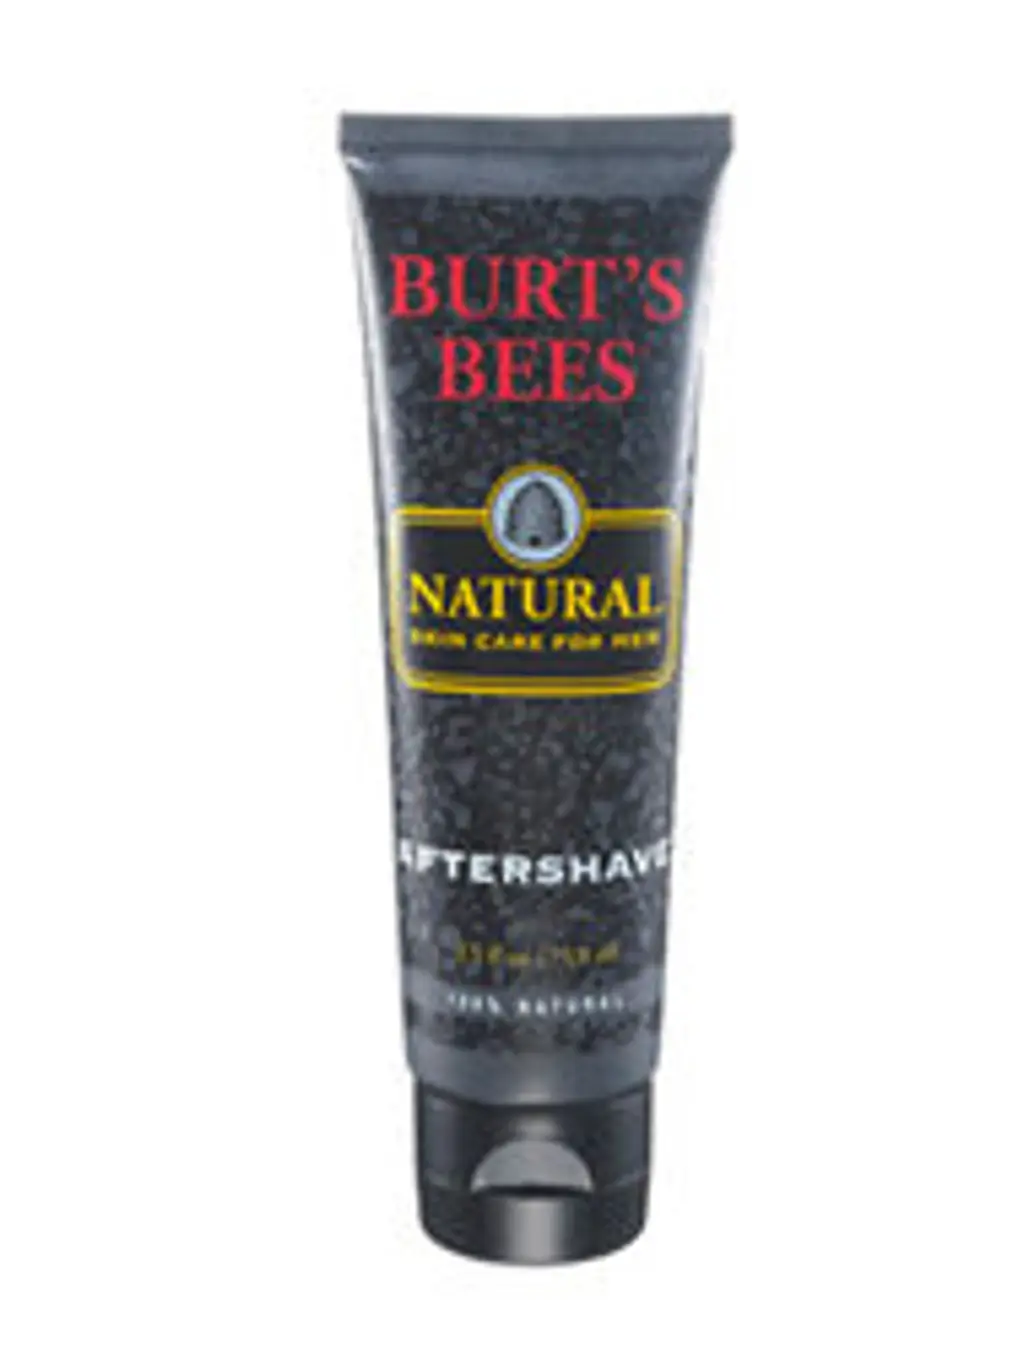 Burt’s Bees Natural Skin Care for Men Aftershave